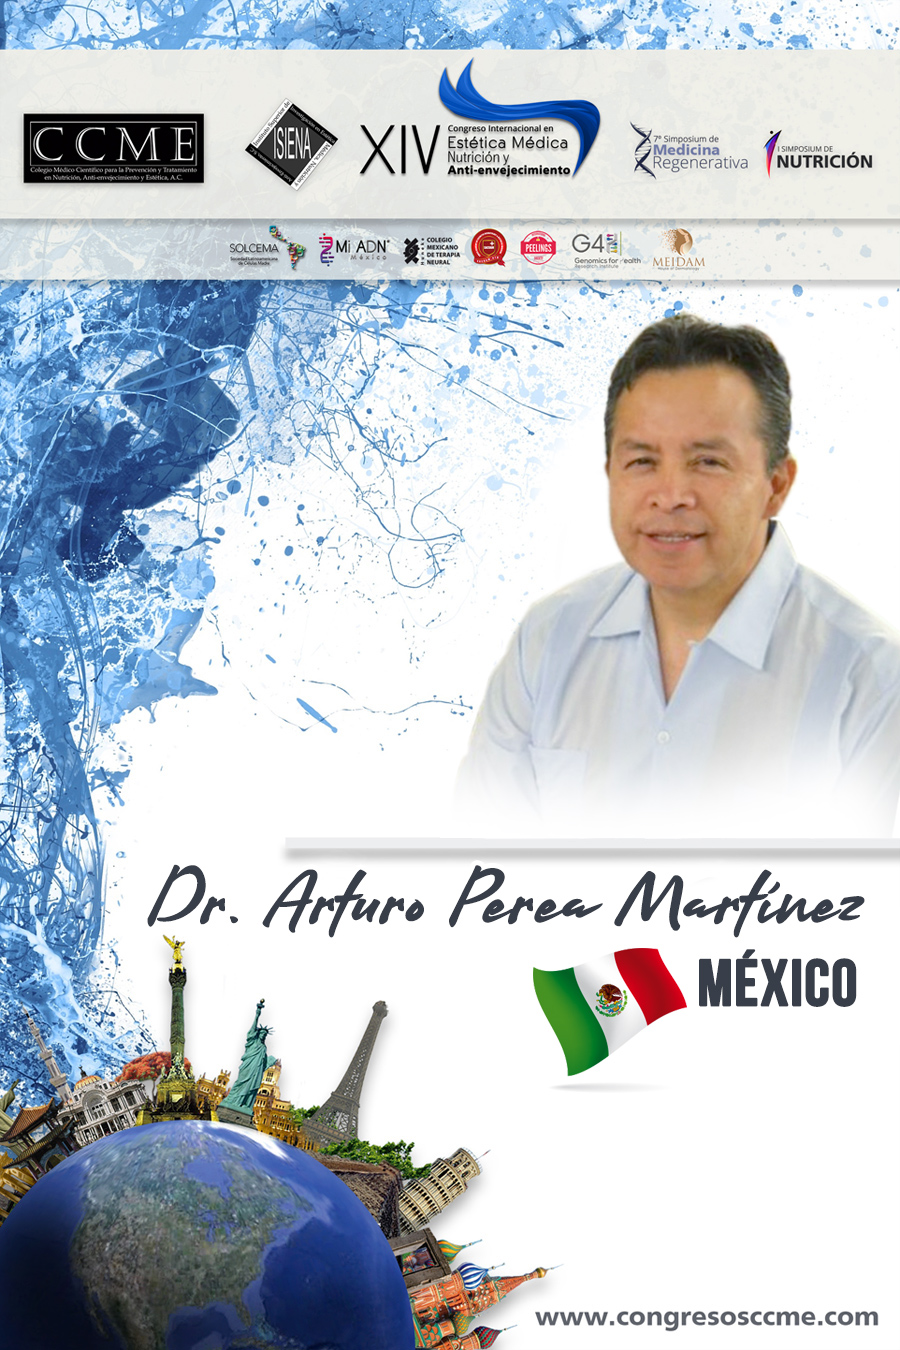 Dr. Arturo Perea Martínez